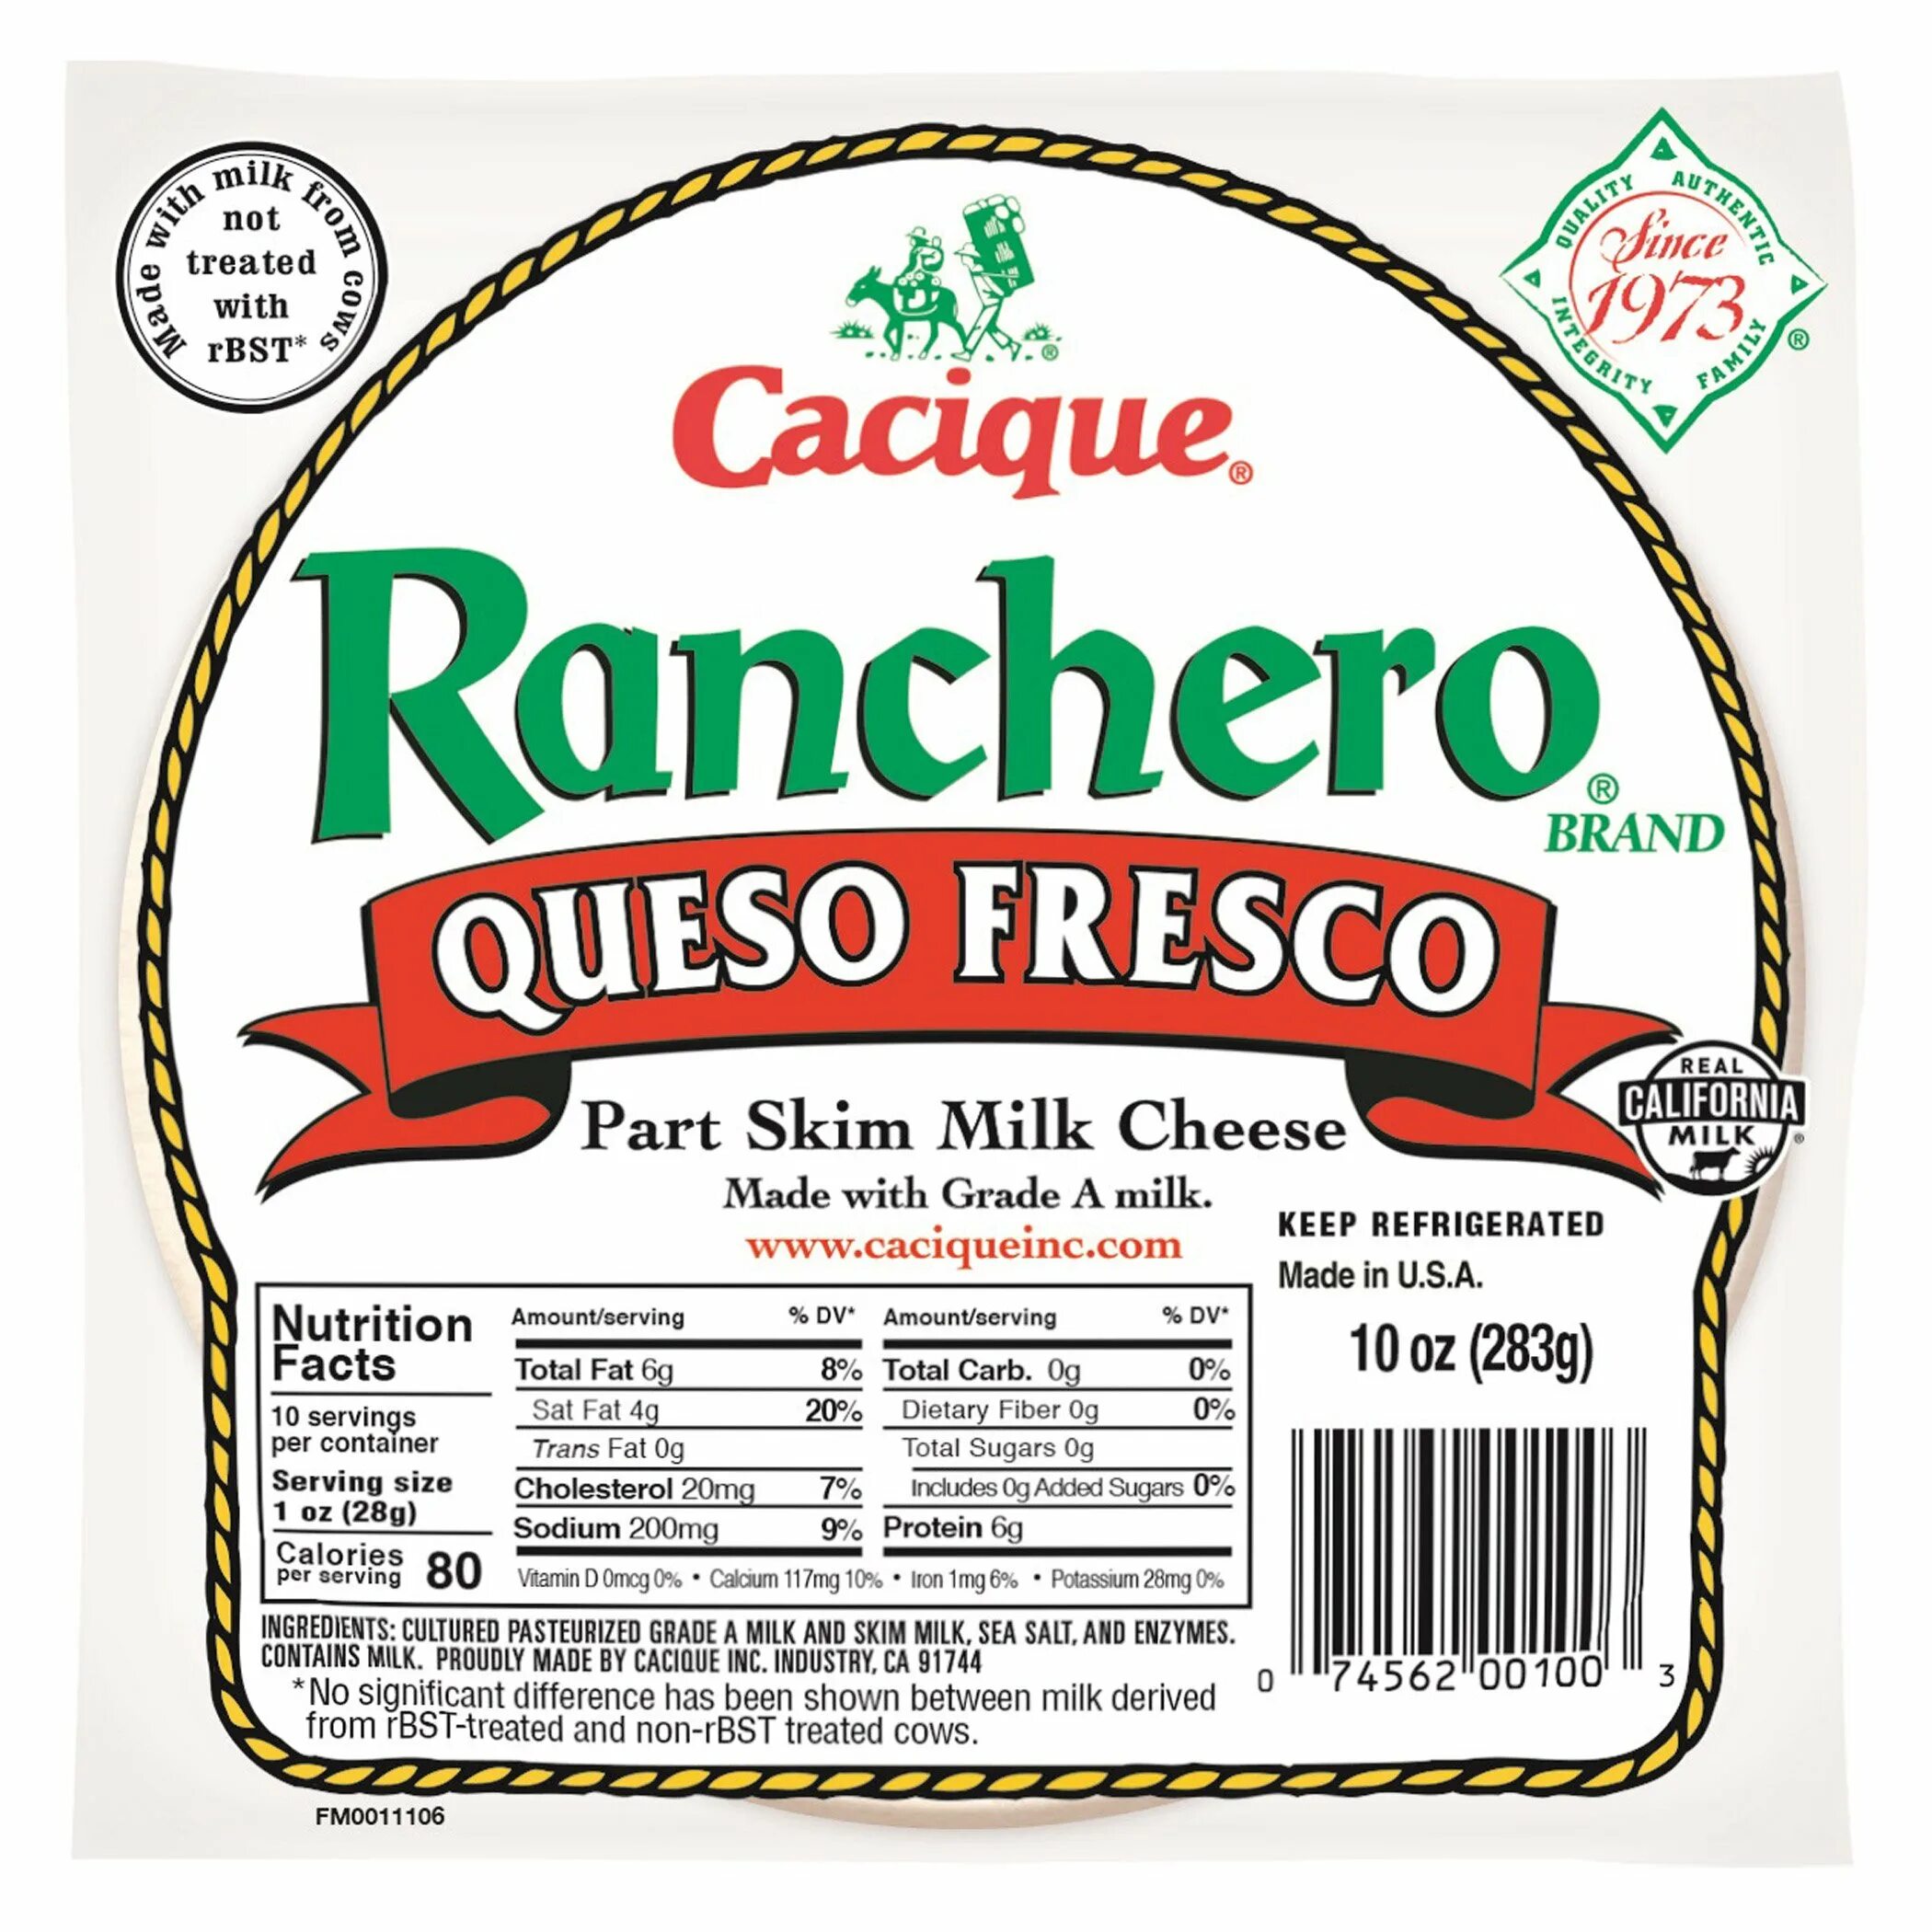 Queso fresco сыр где купить. Сыр Фреско. Queso fresco сыр. Фреско чиз сыр. Cheese is made from Milk.